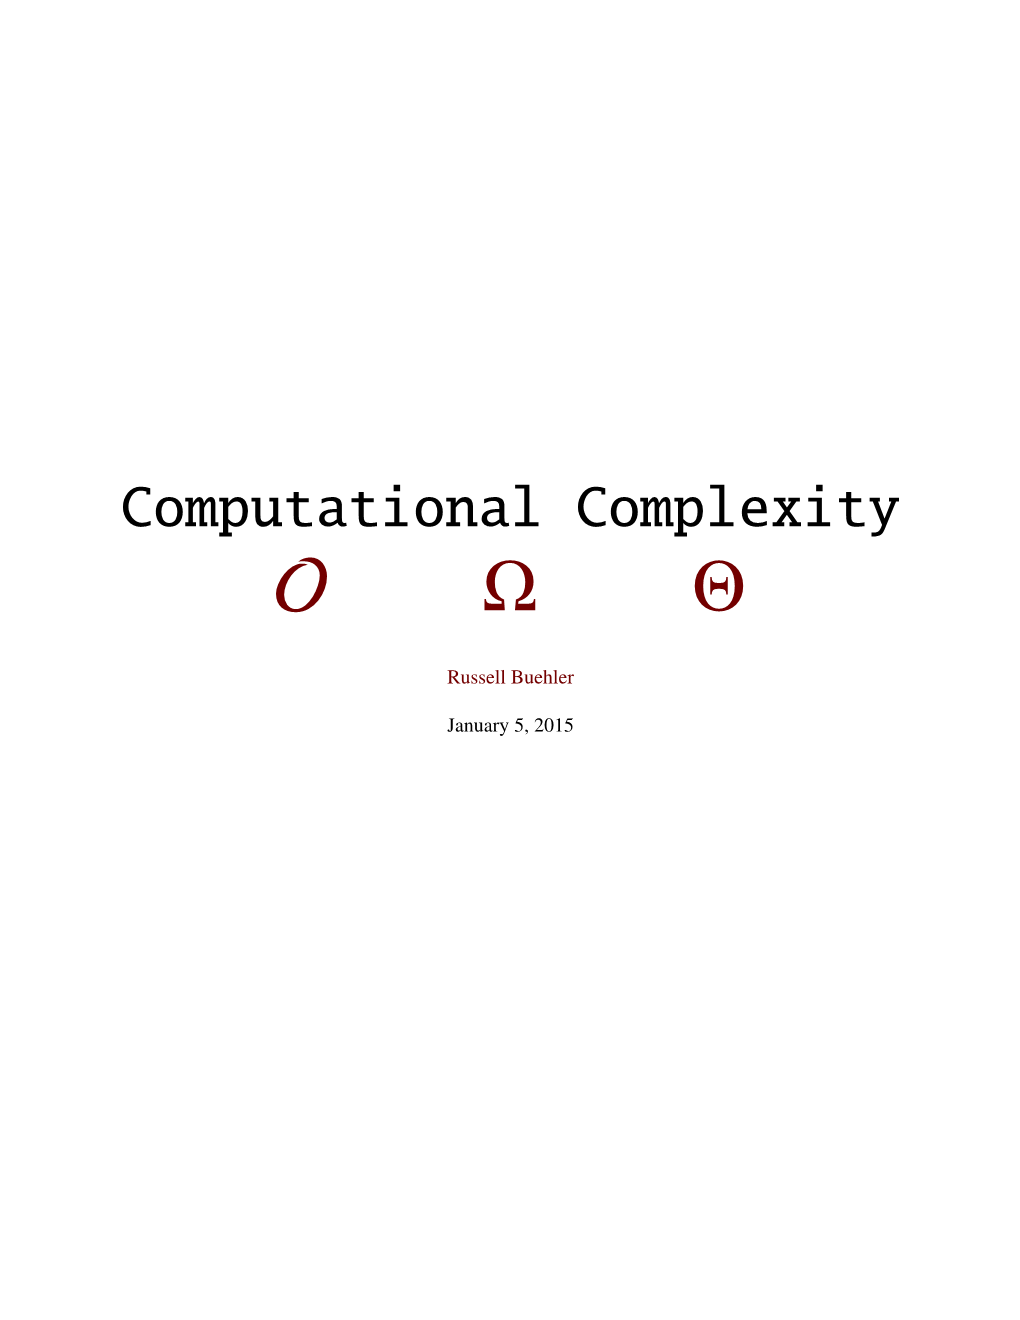 Algorithms & Computational Complexity